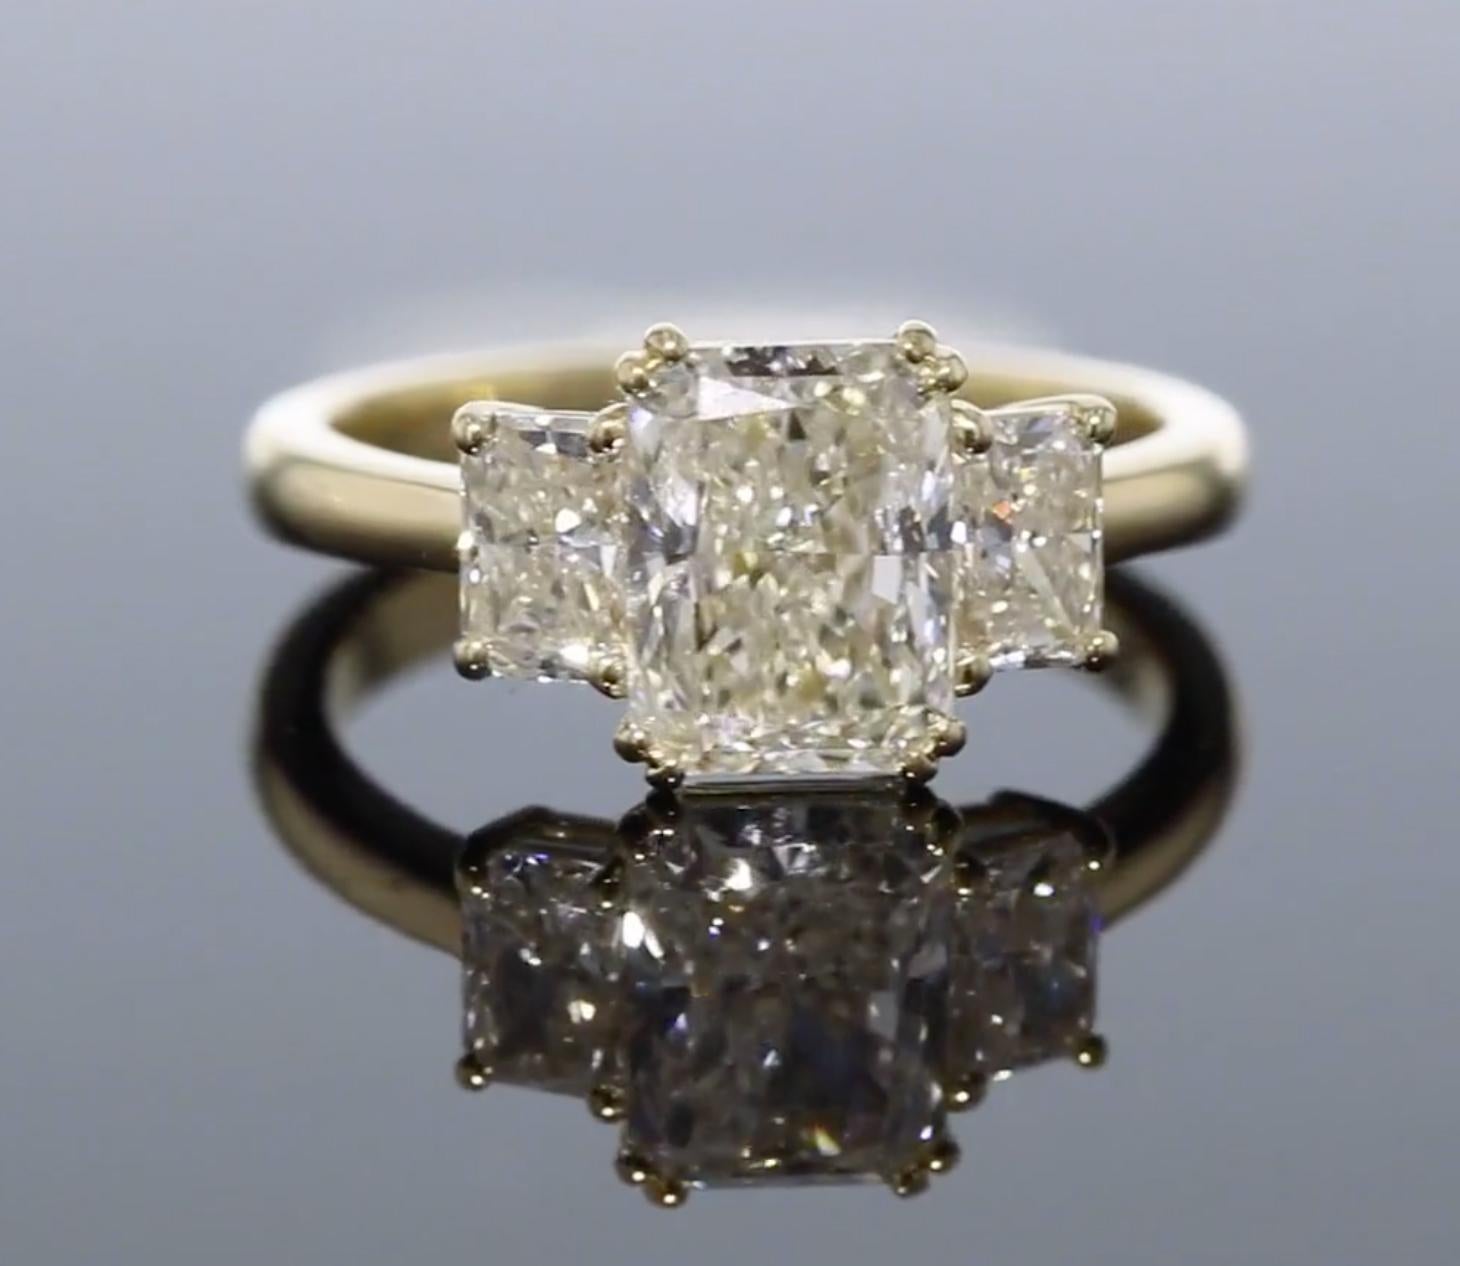 3 stone radiant cut engagement ring